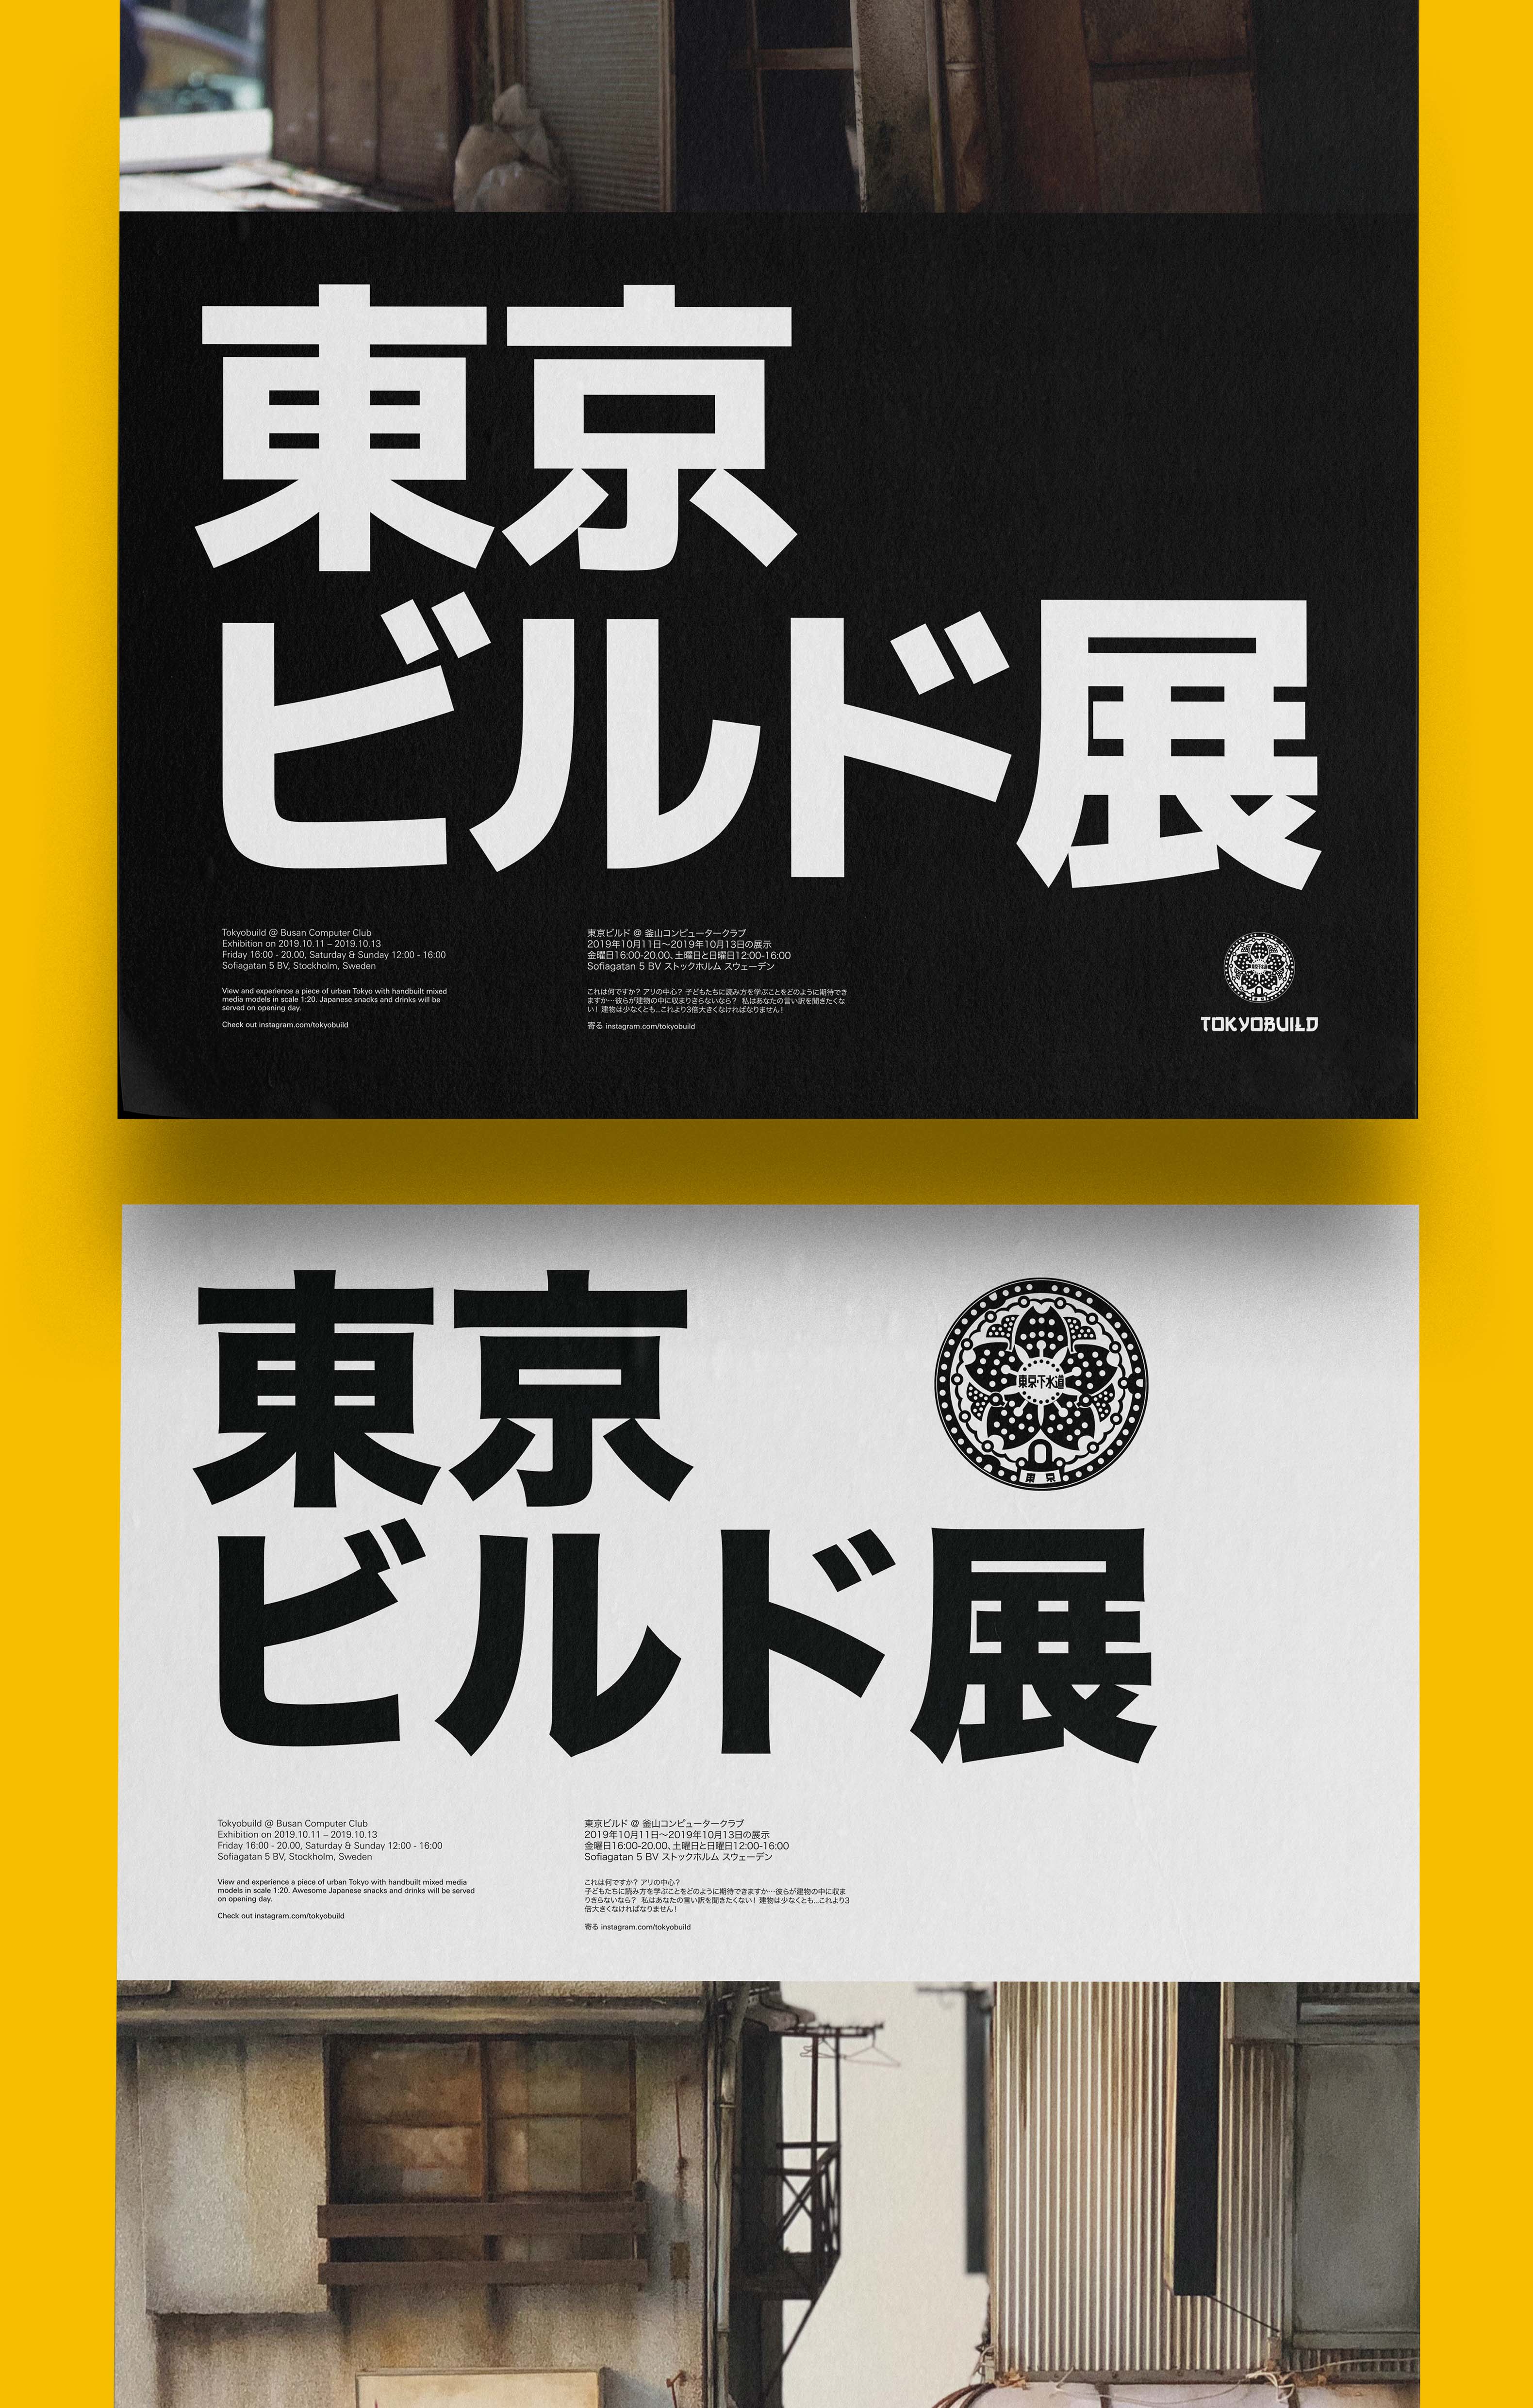 Tokyo build - Posters 2x